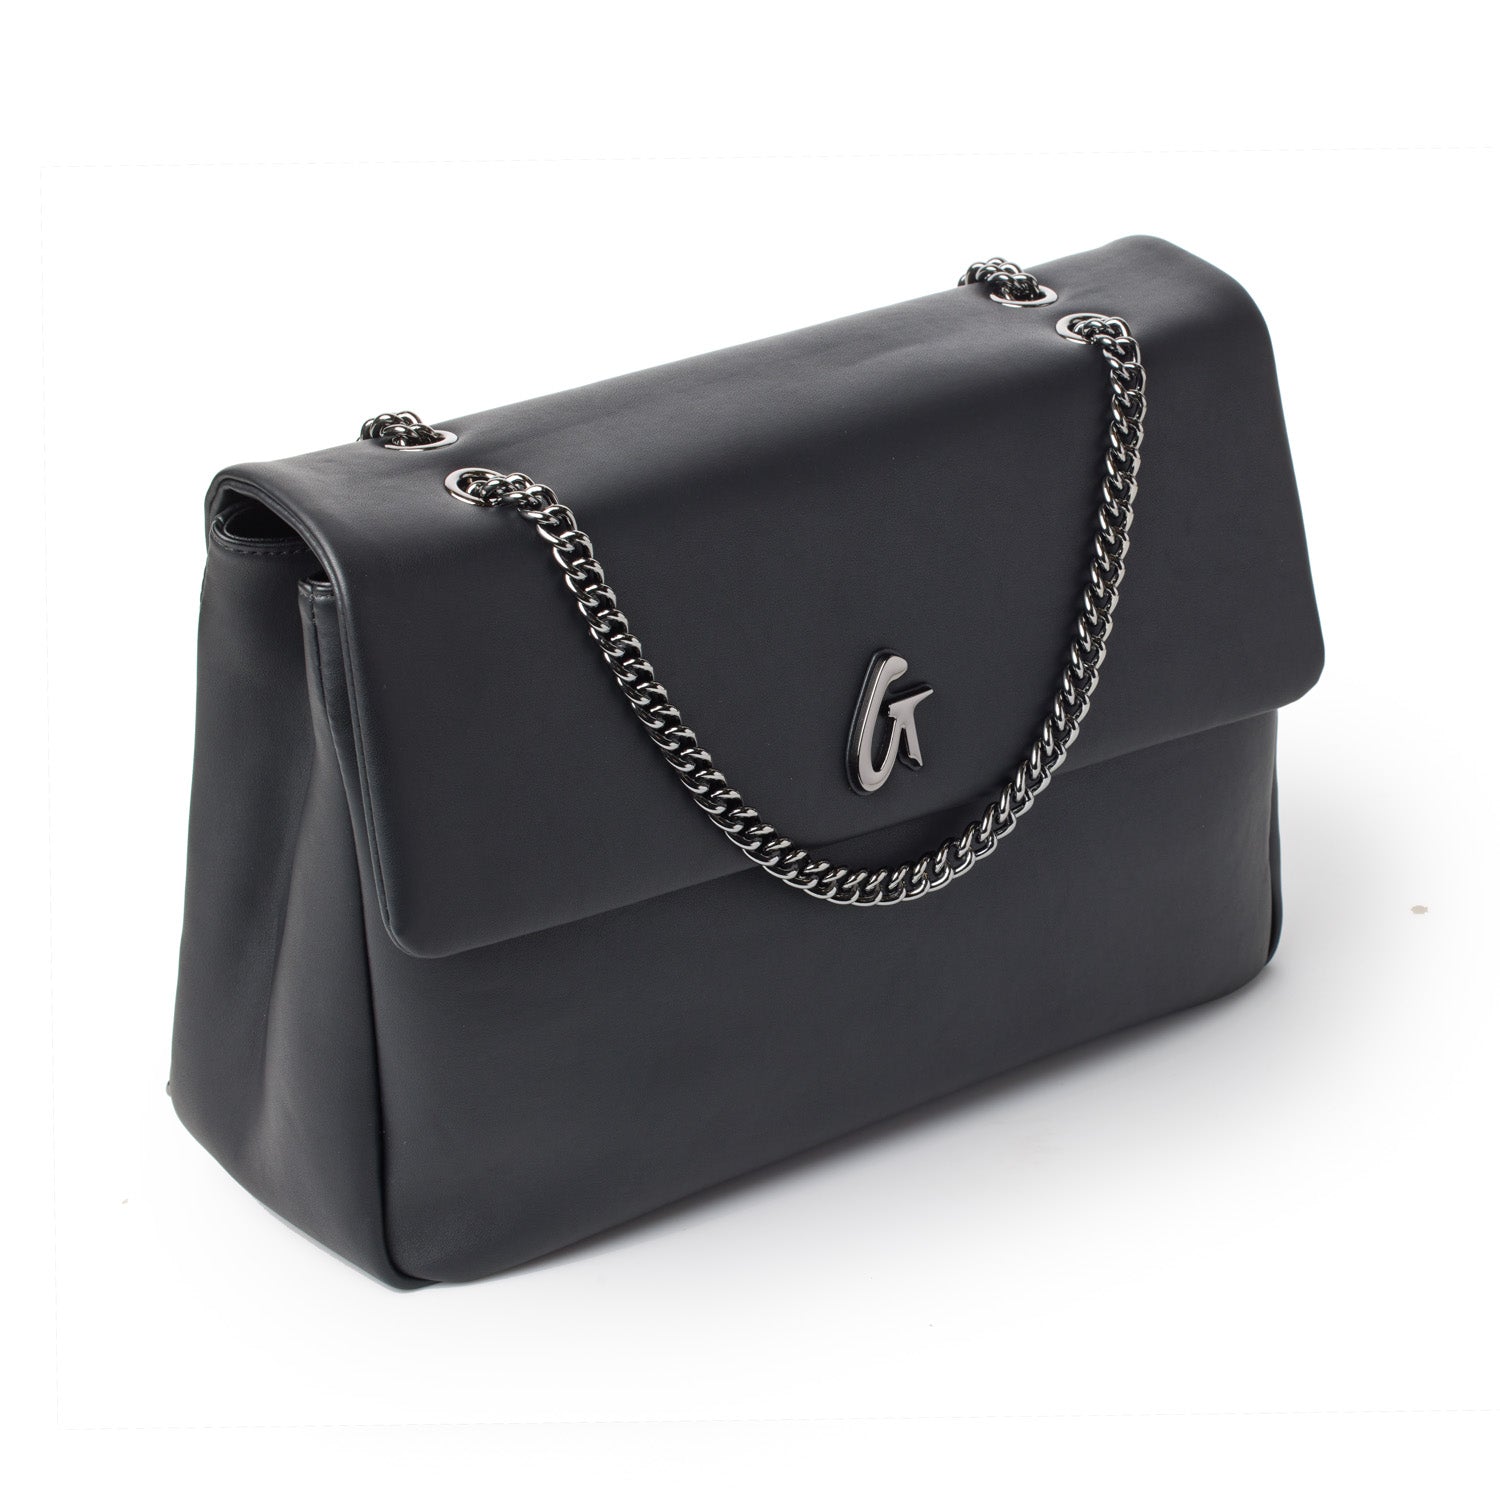 STANDARD LARGE CLASSIC FLAP BAG MATTE BLACK – Glam-Aholic Lifestyle